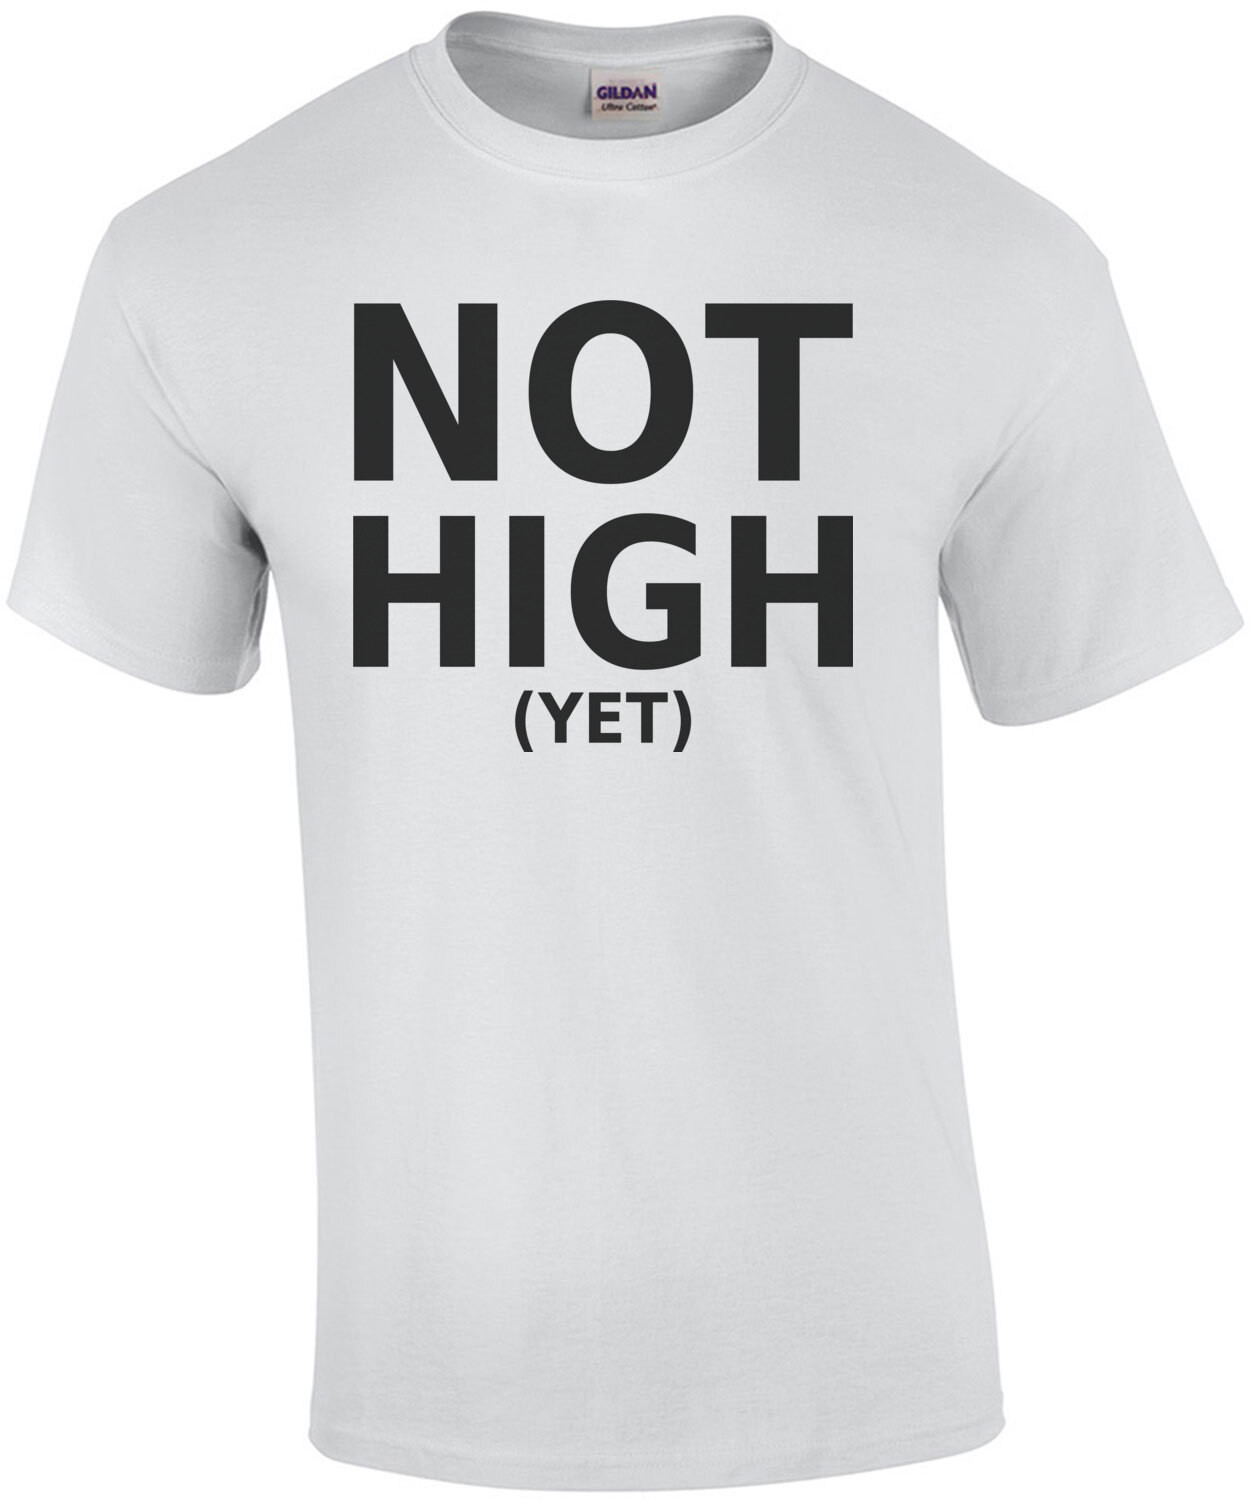 Not High (Yet) - Funny pot smoking weed t-shirt